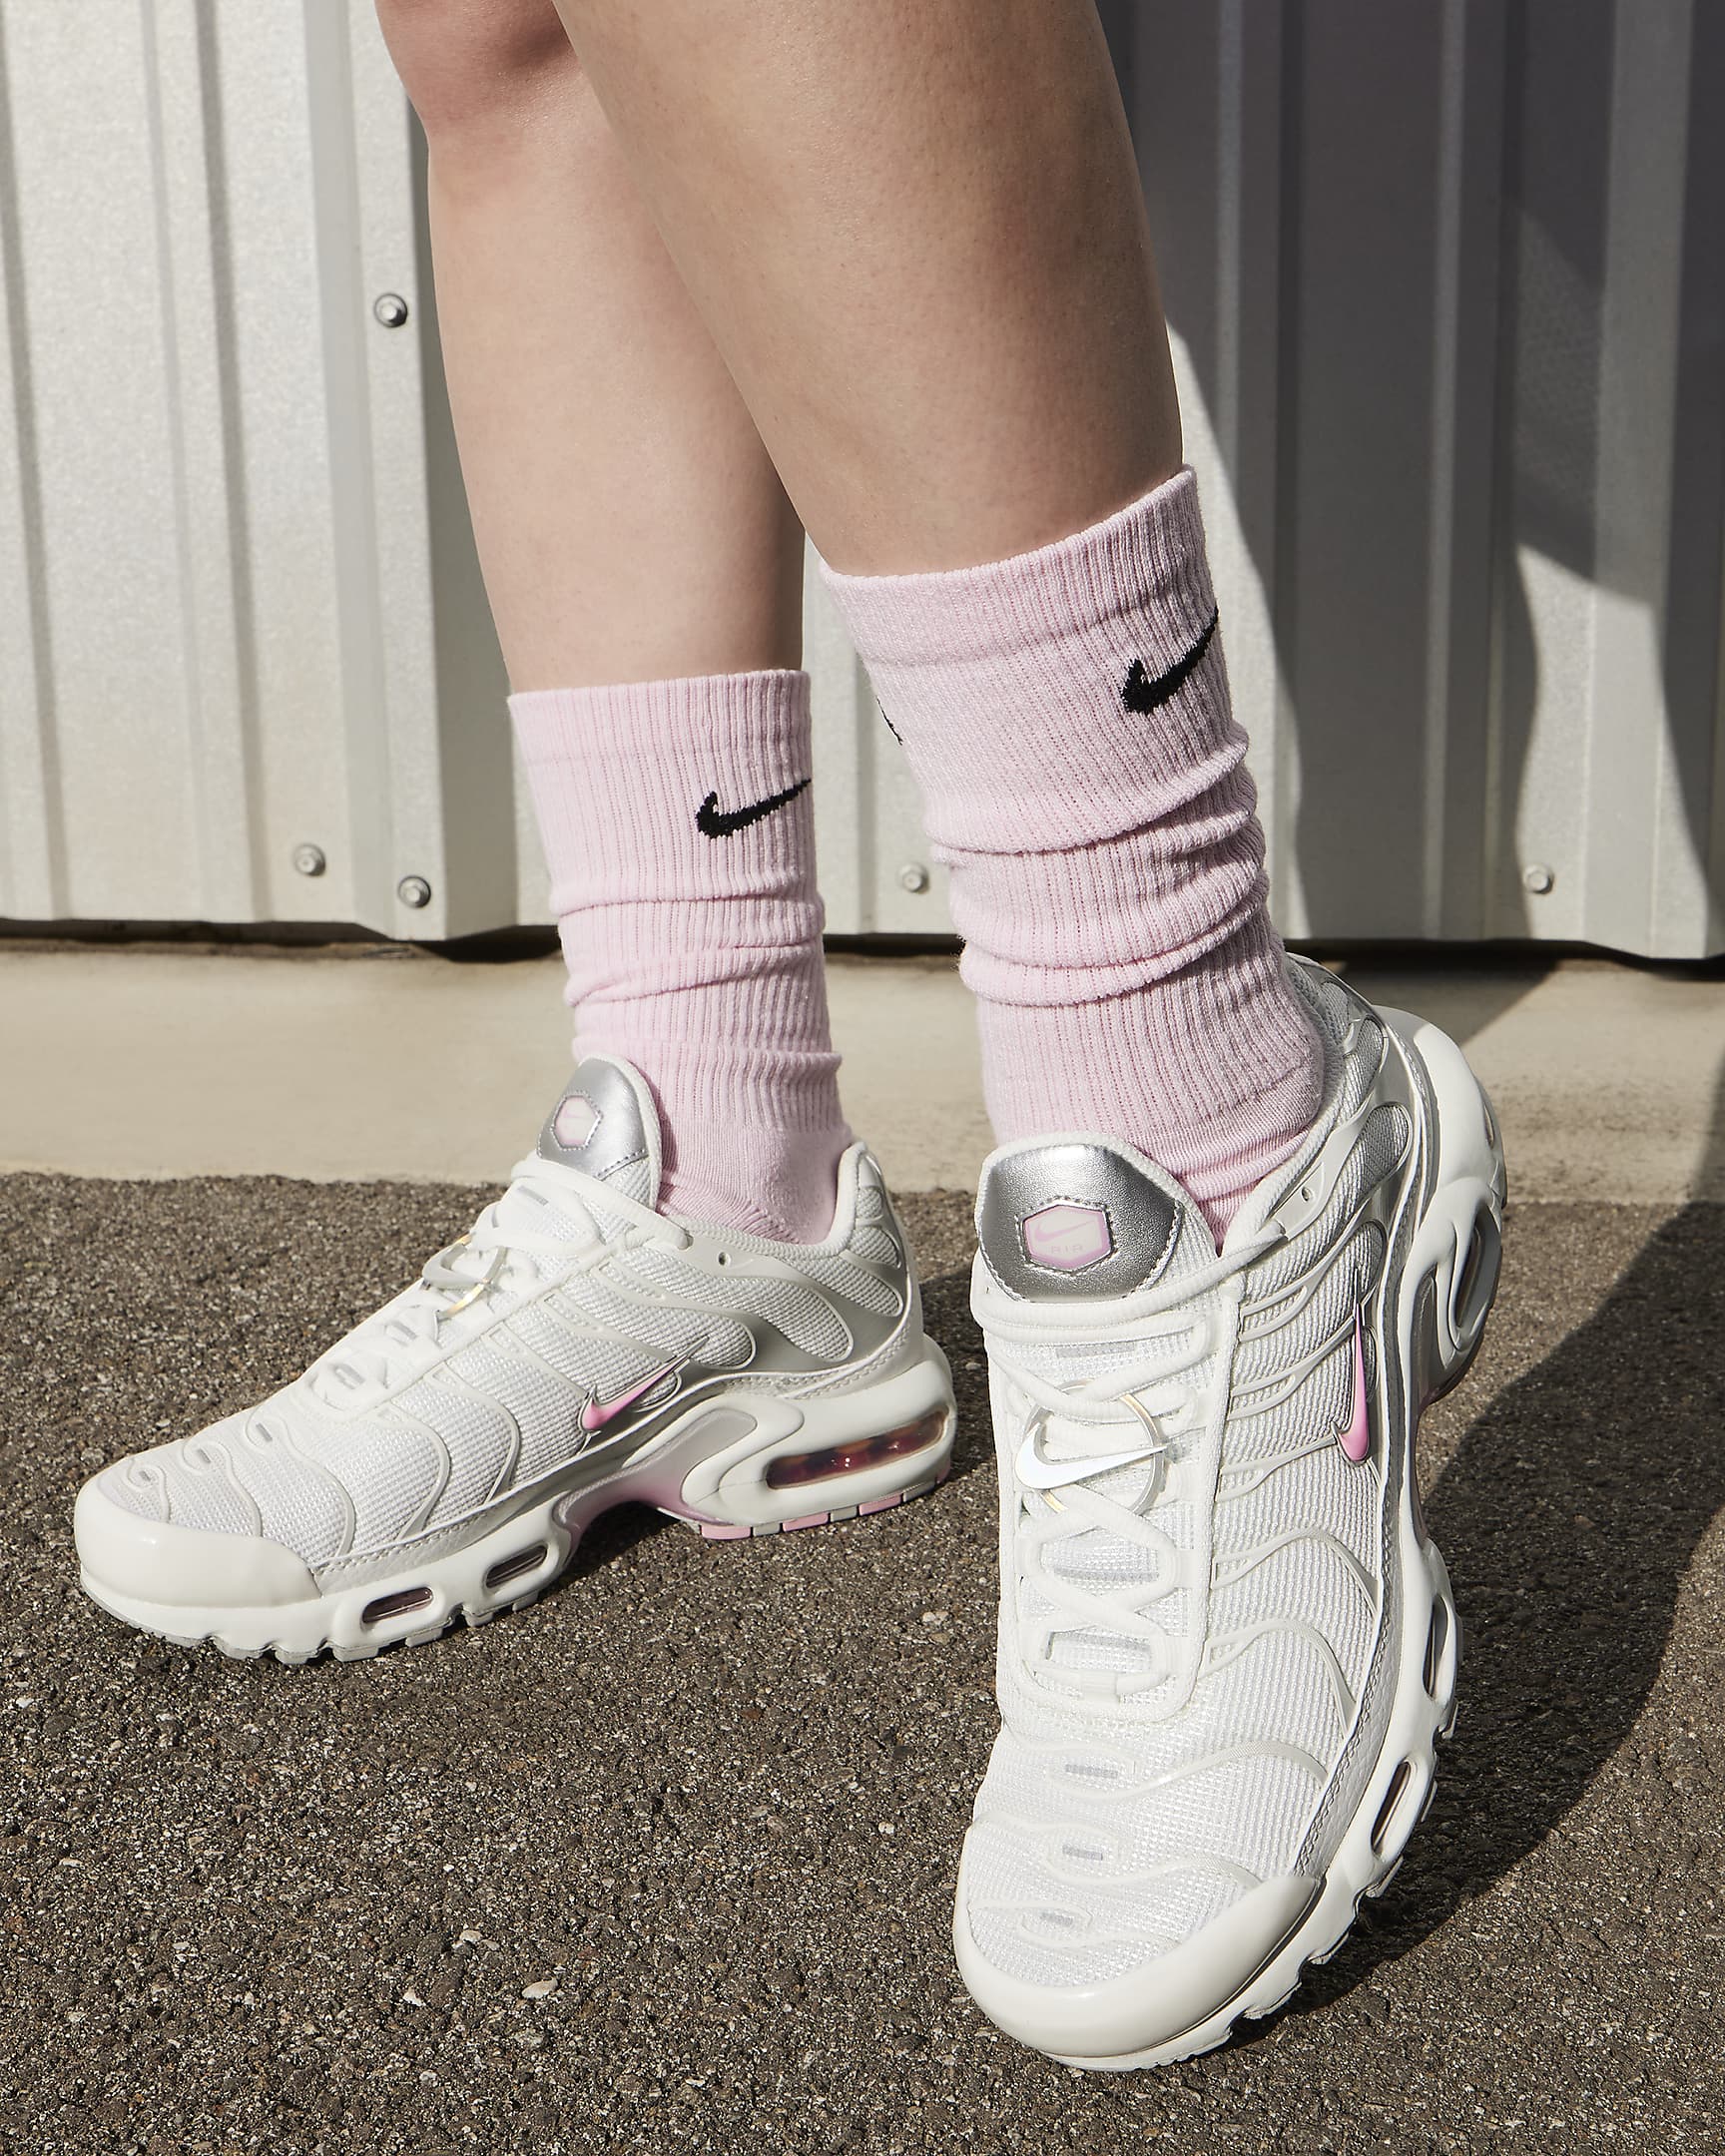 Sapatilhas Nike Air Max Plus para mulher - Branco Summit/Cinzento Fog/Prateado metalizado/Rosa Rise